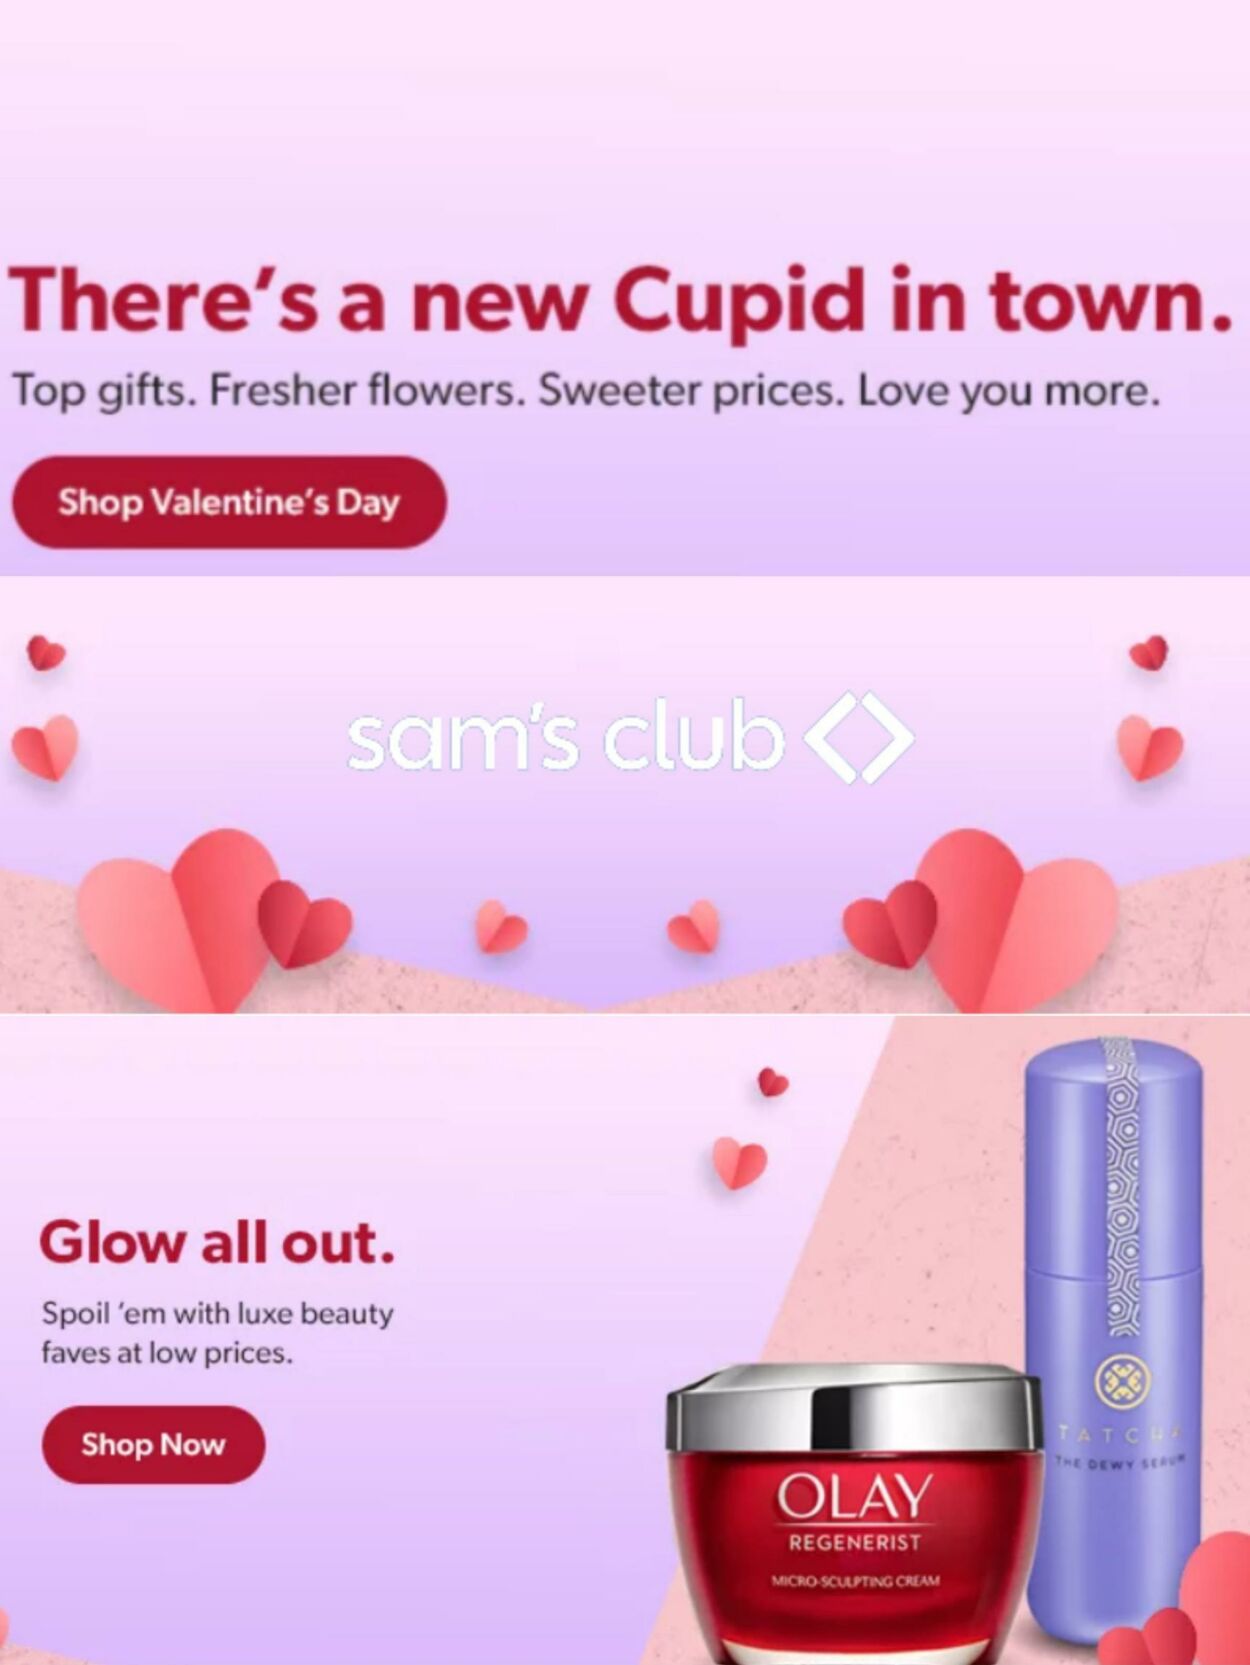 Sam's Club Promotional weekly ads